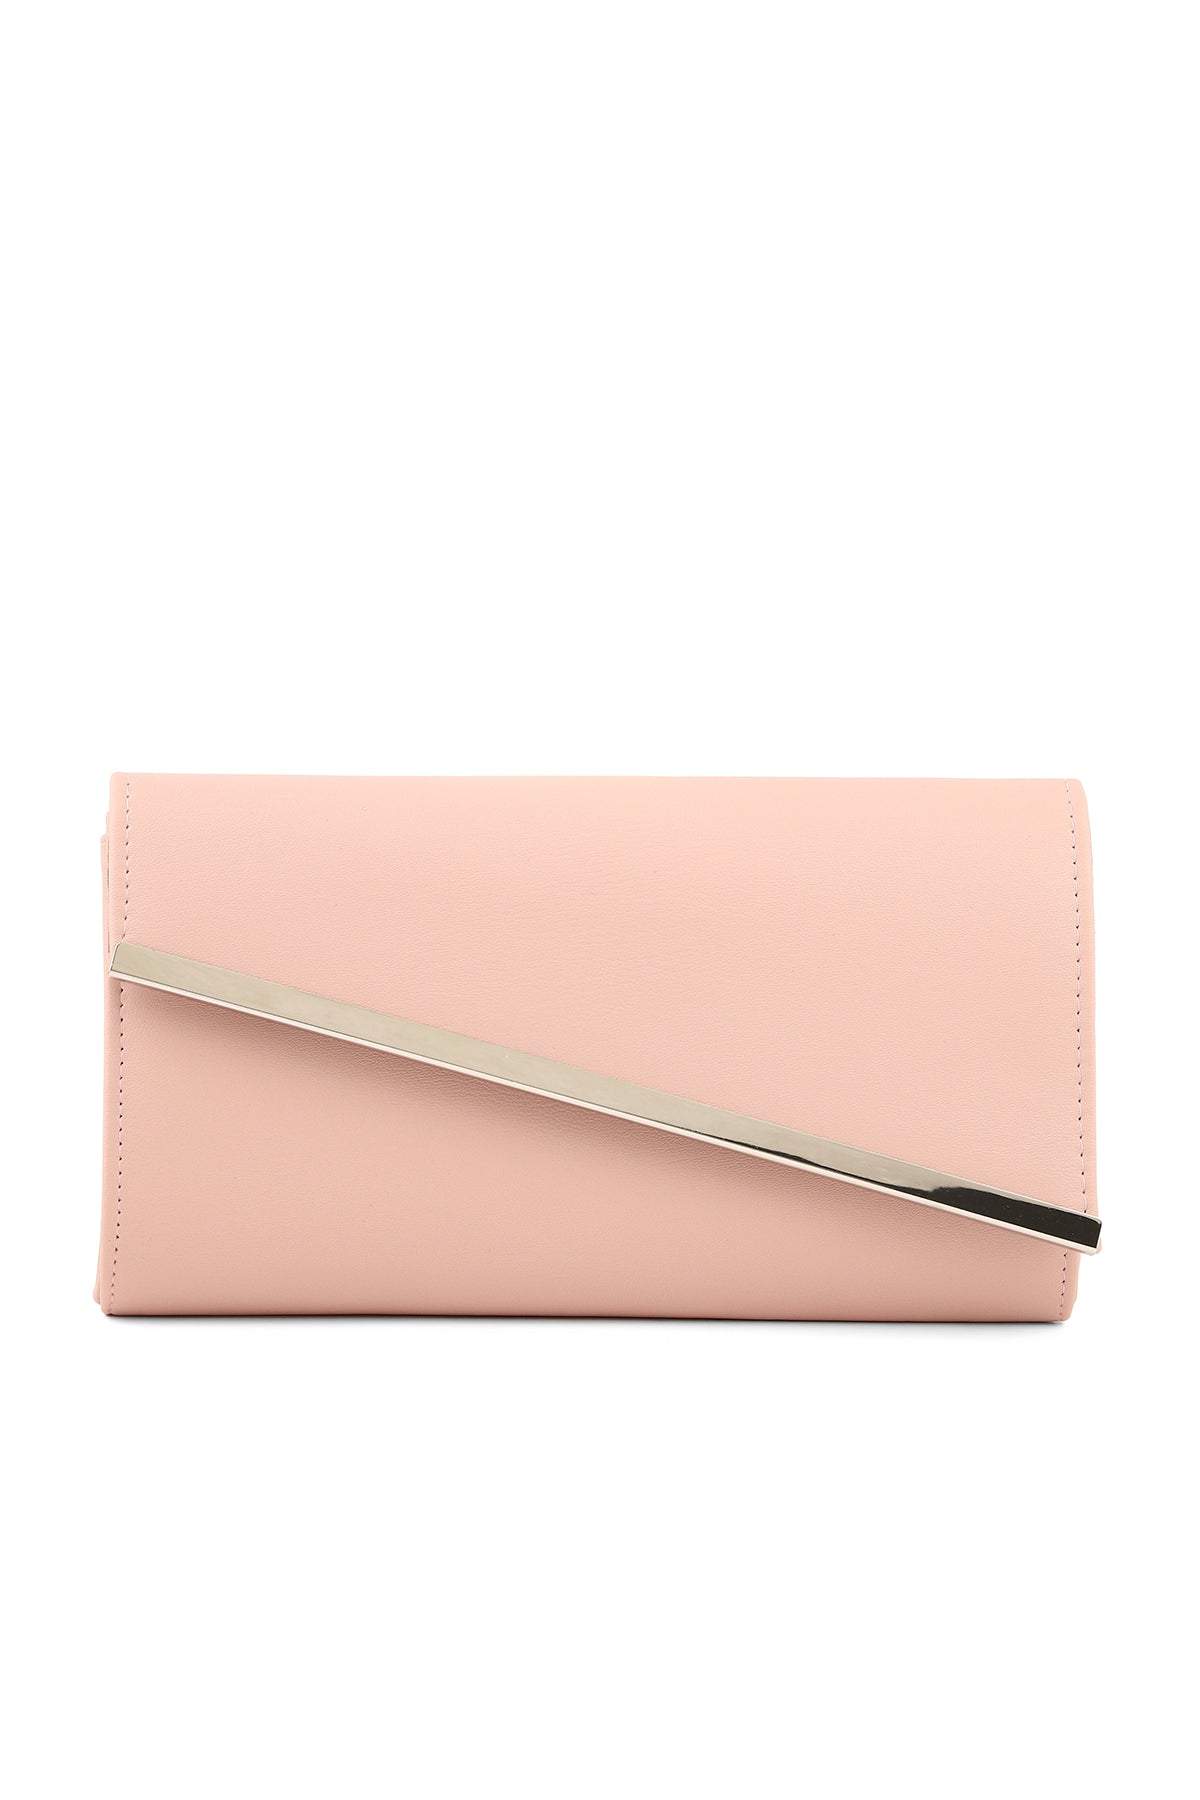 Flap Shoulder Bags B21585-Pink